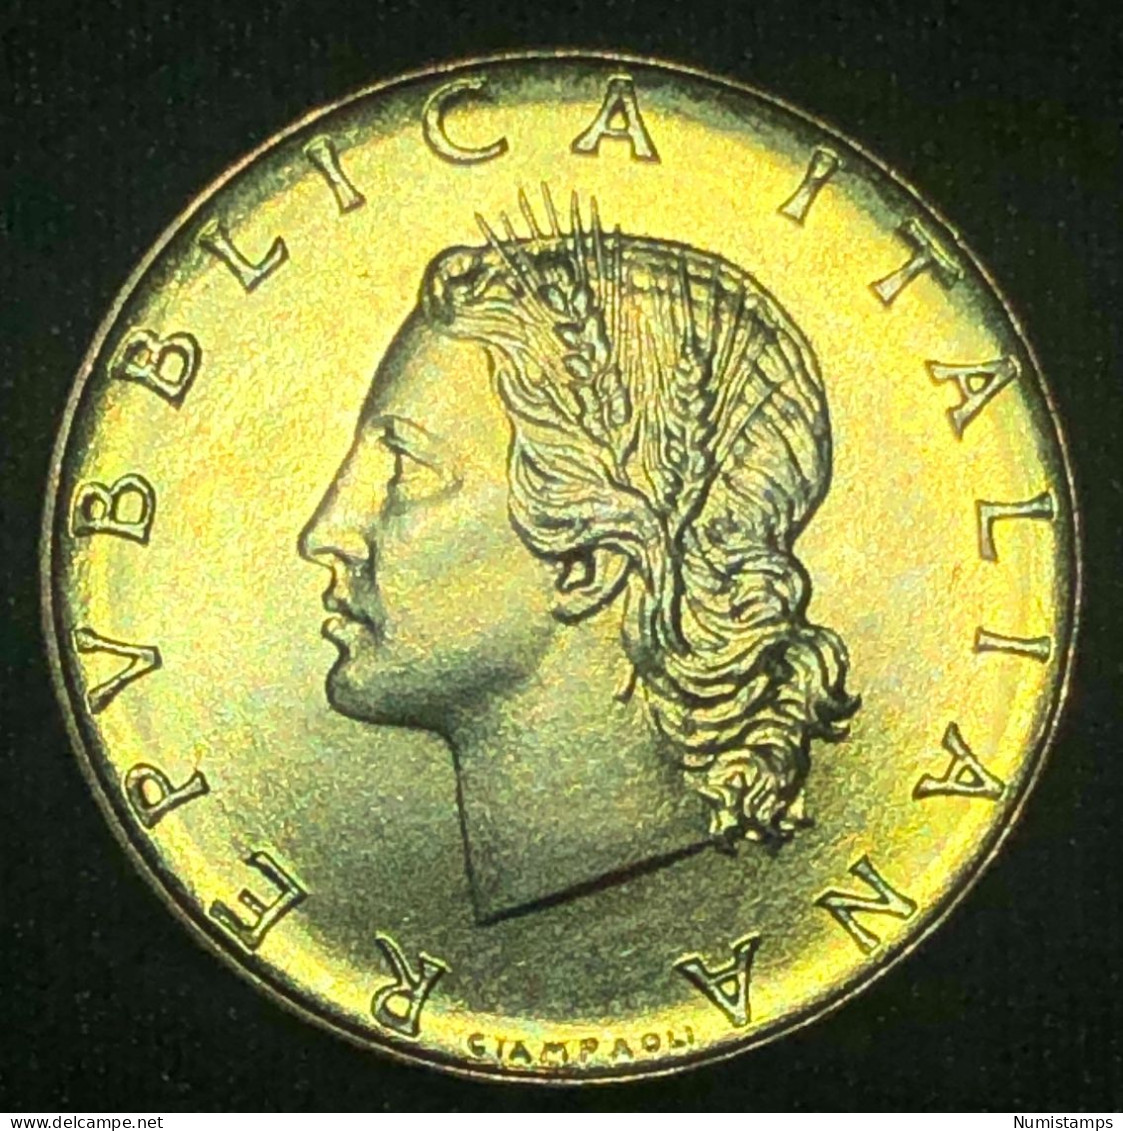 Italia 20 Lire, 1975 - 20 Lire